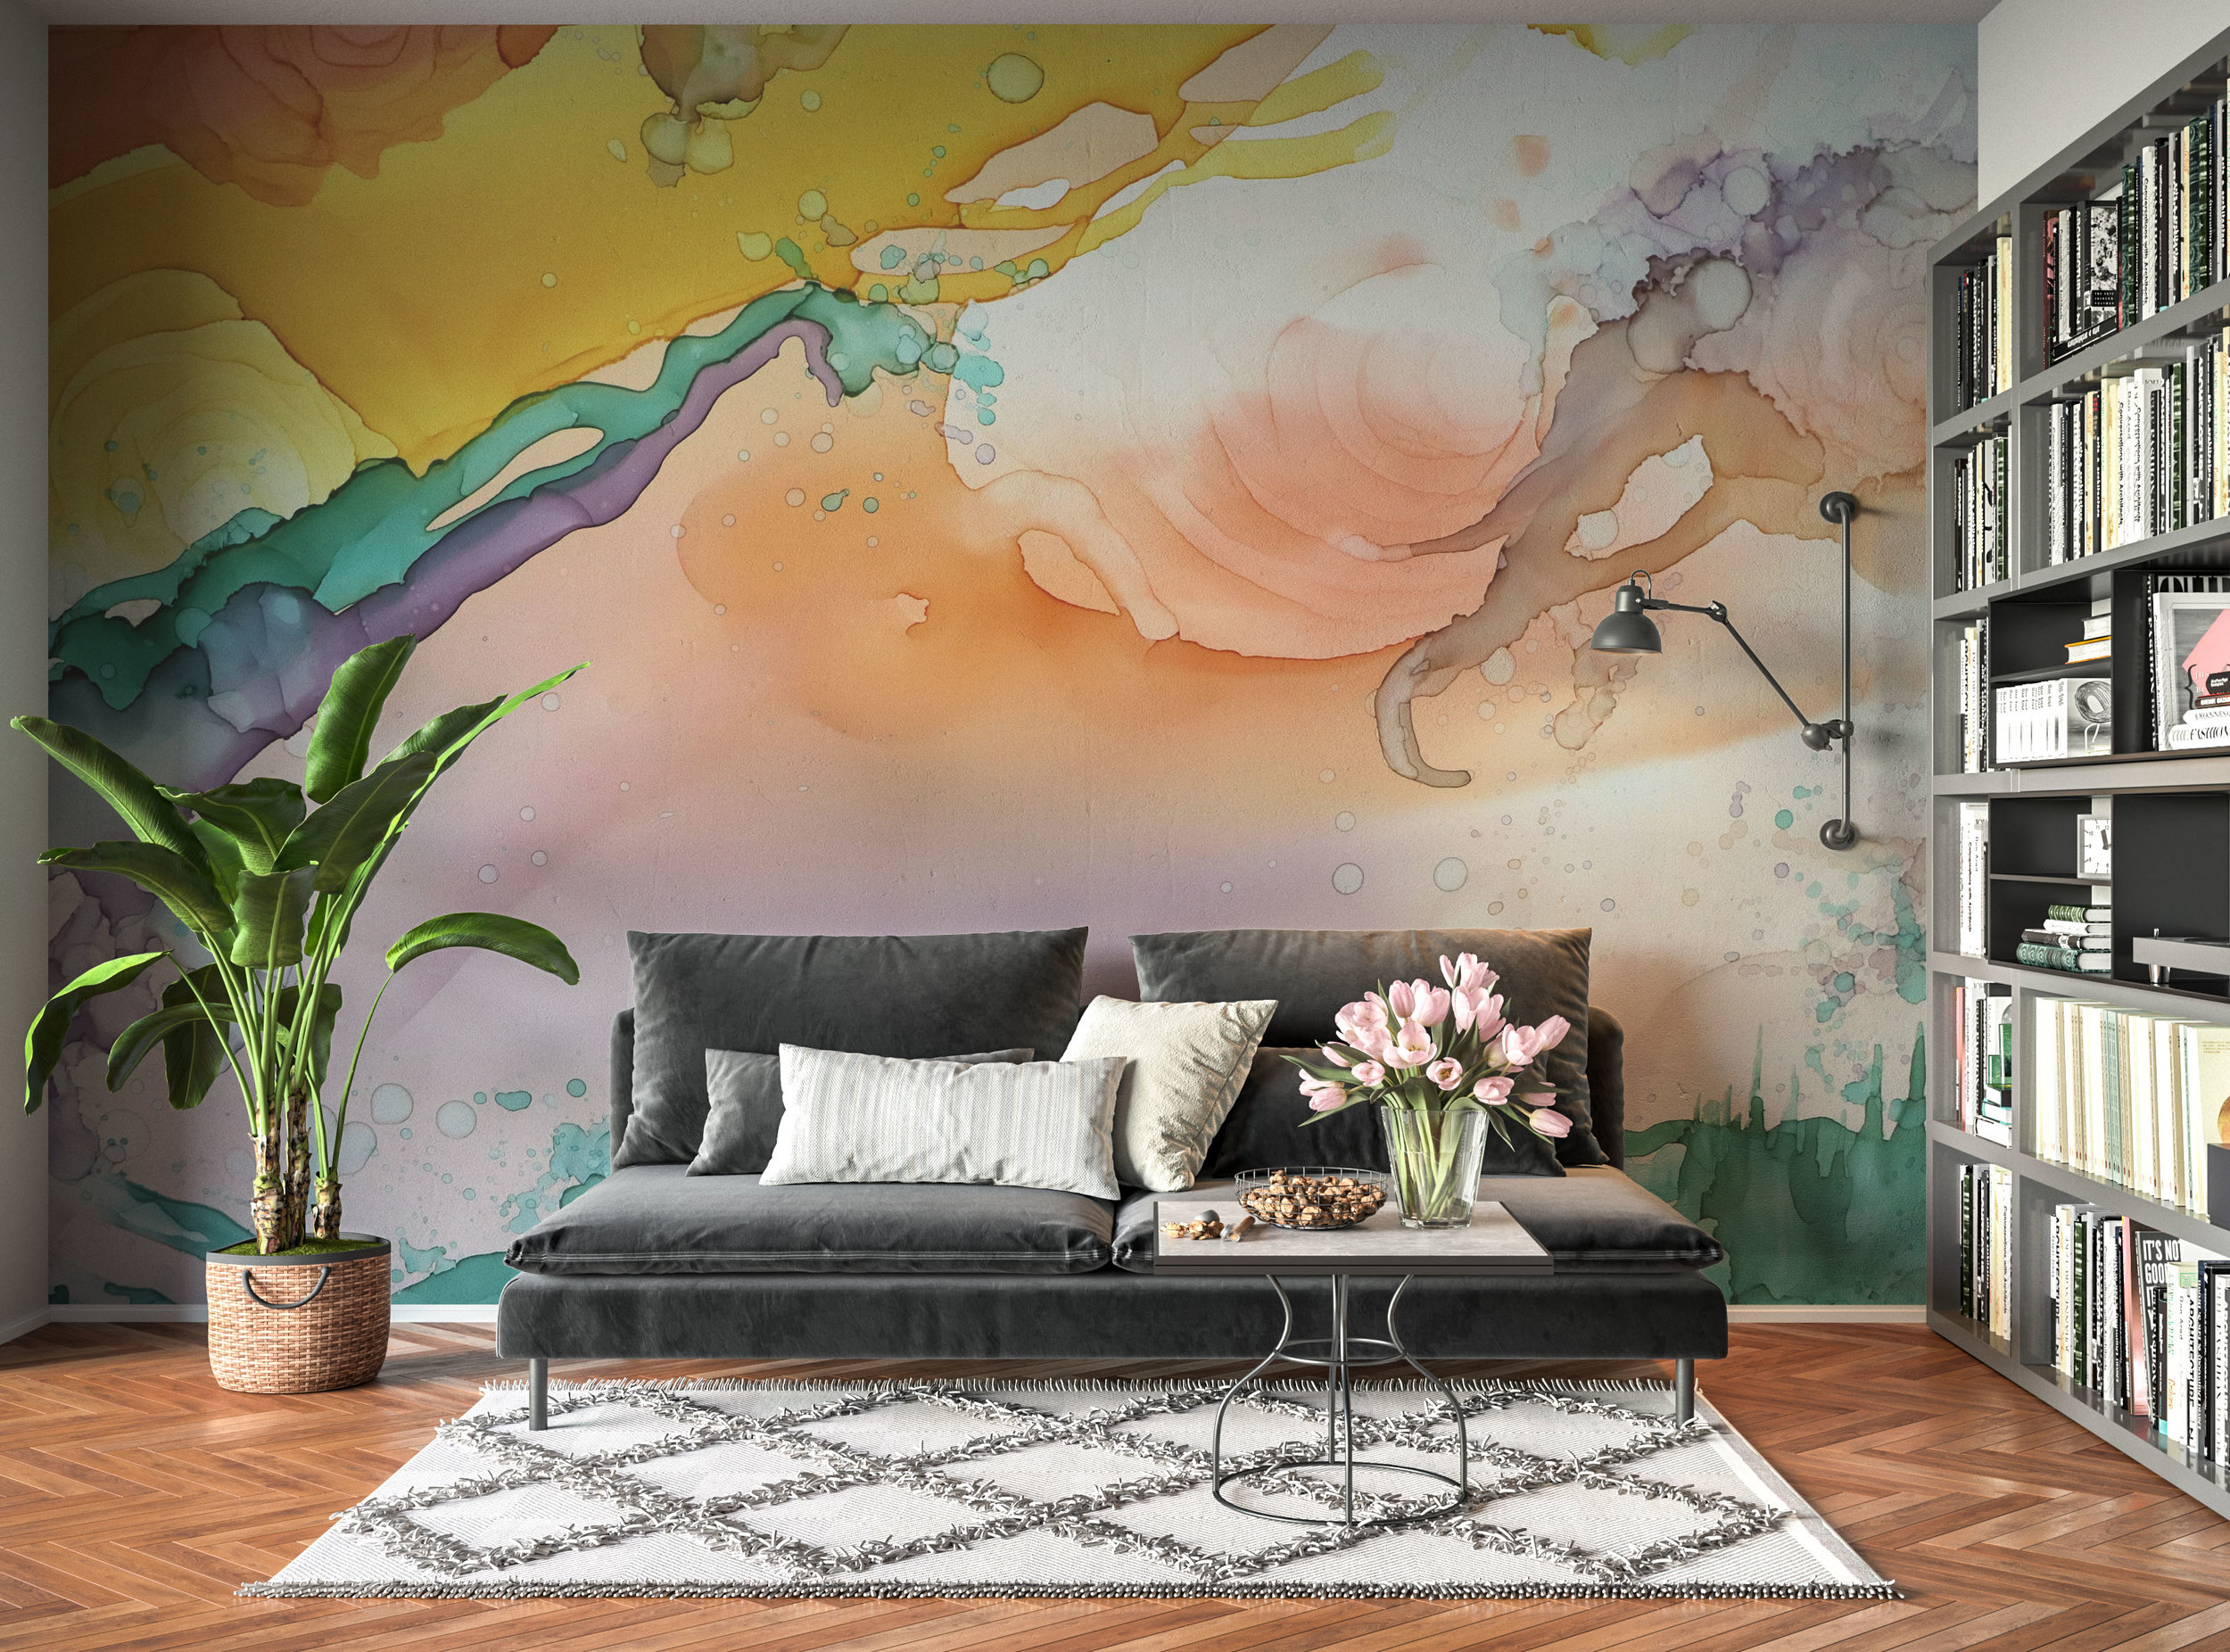 custom wallpaper mural design by north carolina abstract artist amanda moody